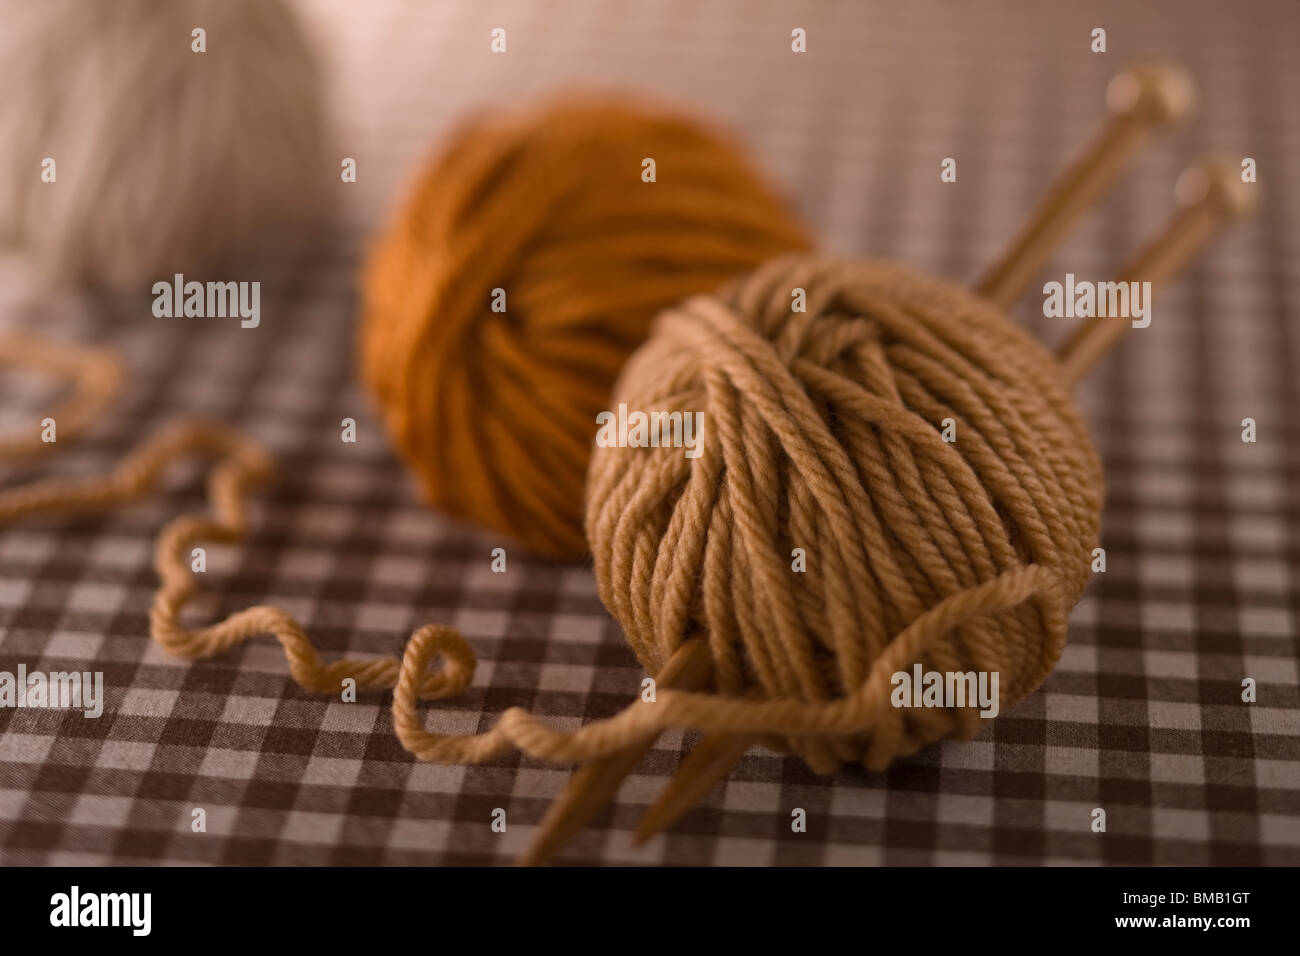 Ball of Knitting Yarn Stock Photo